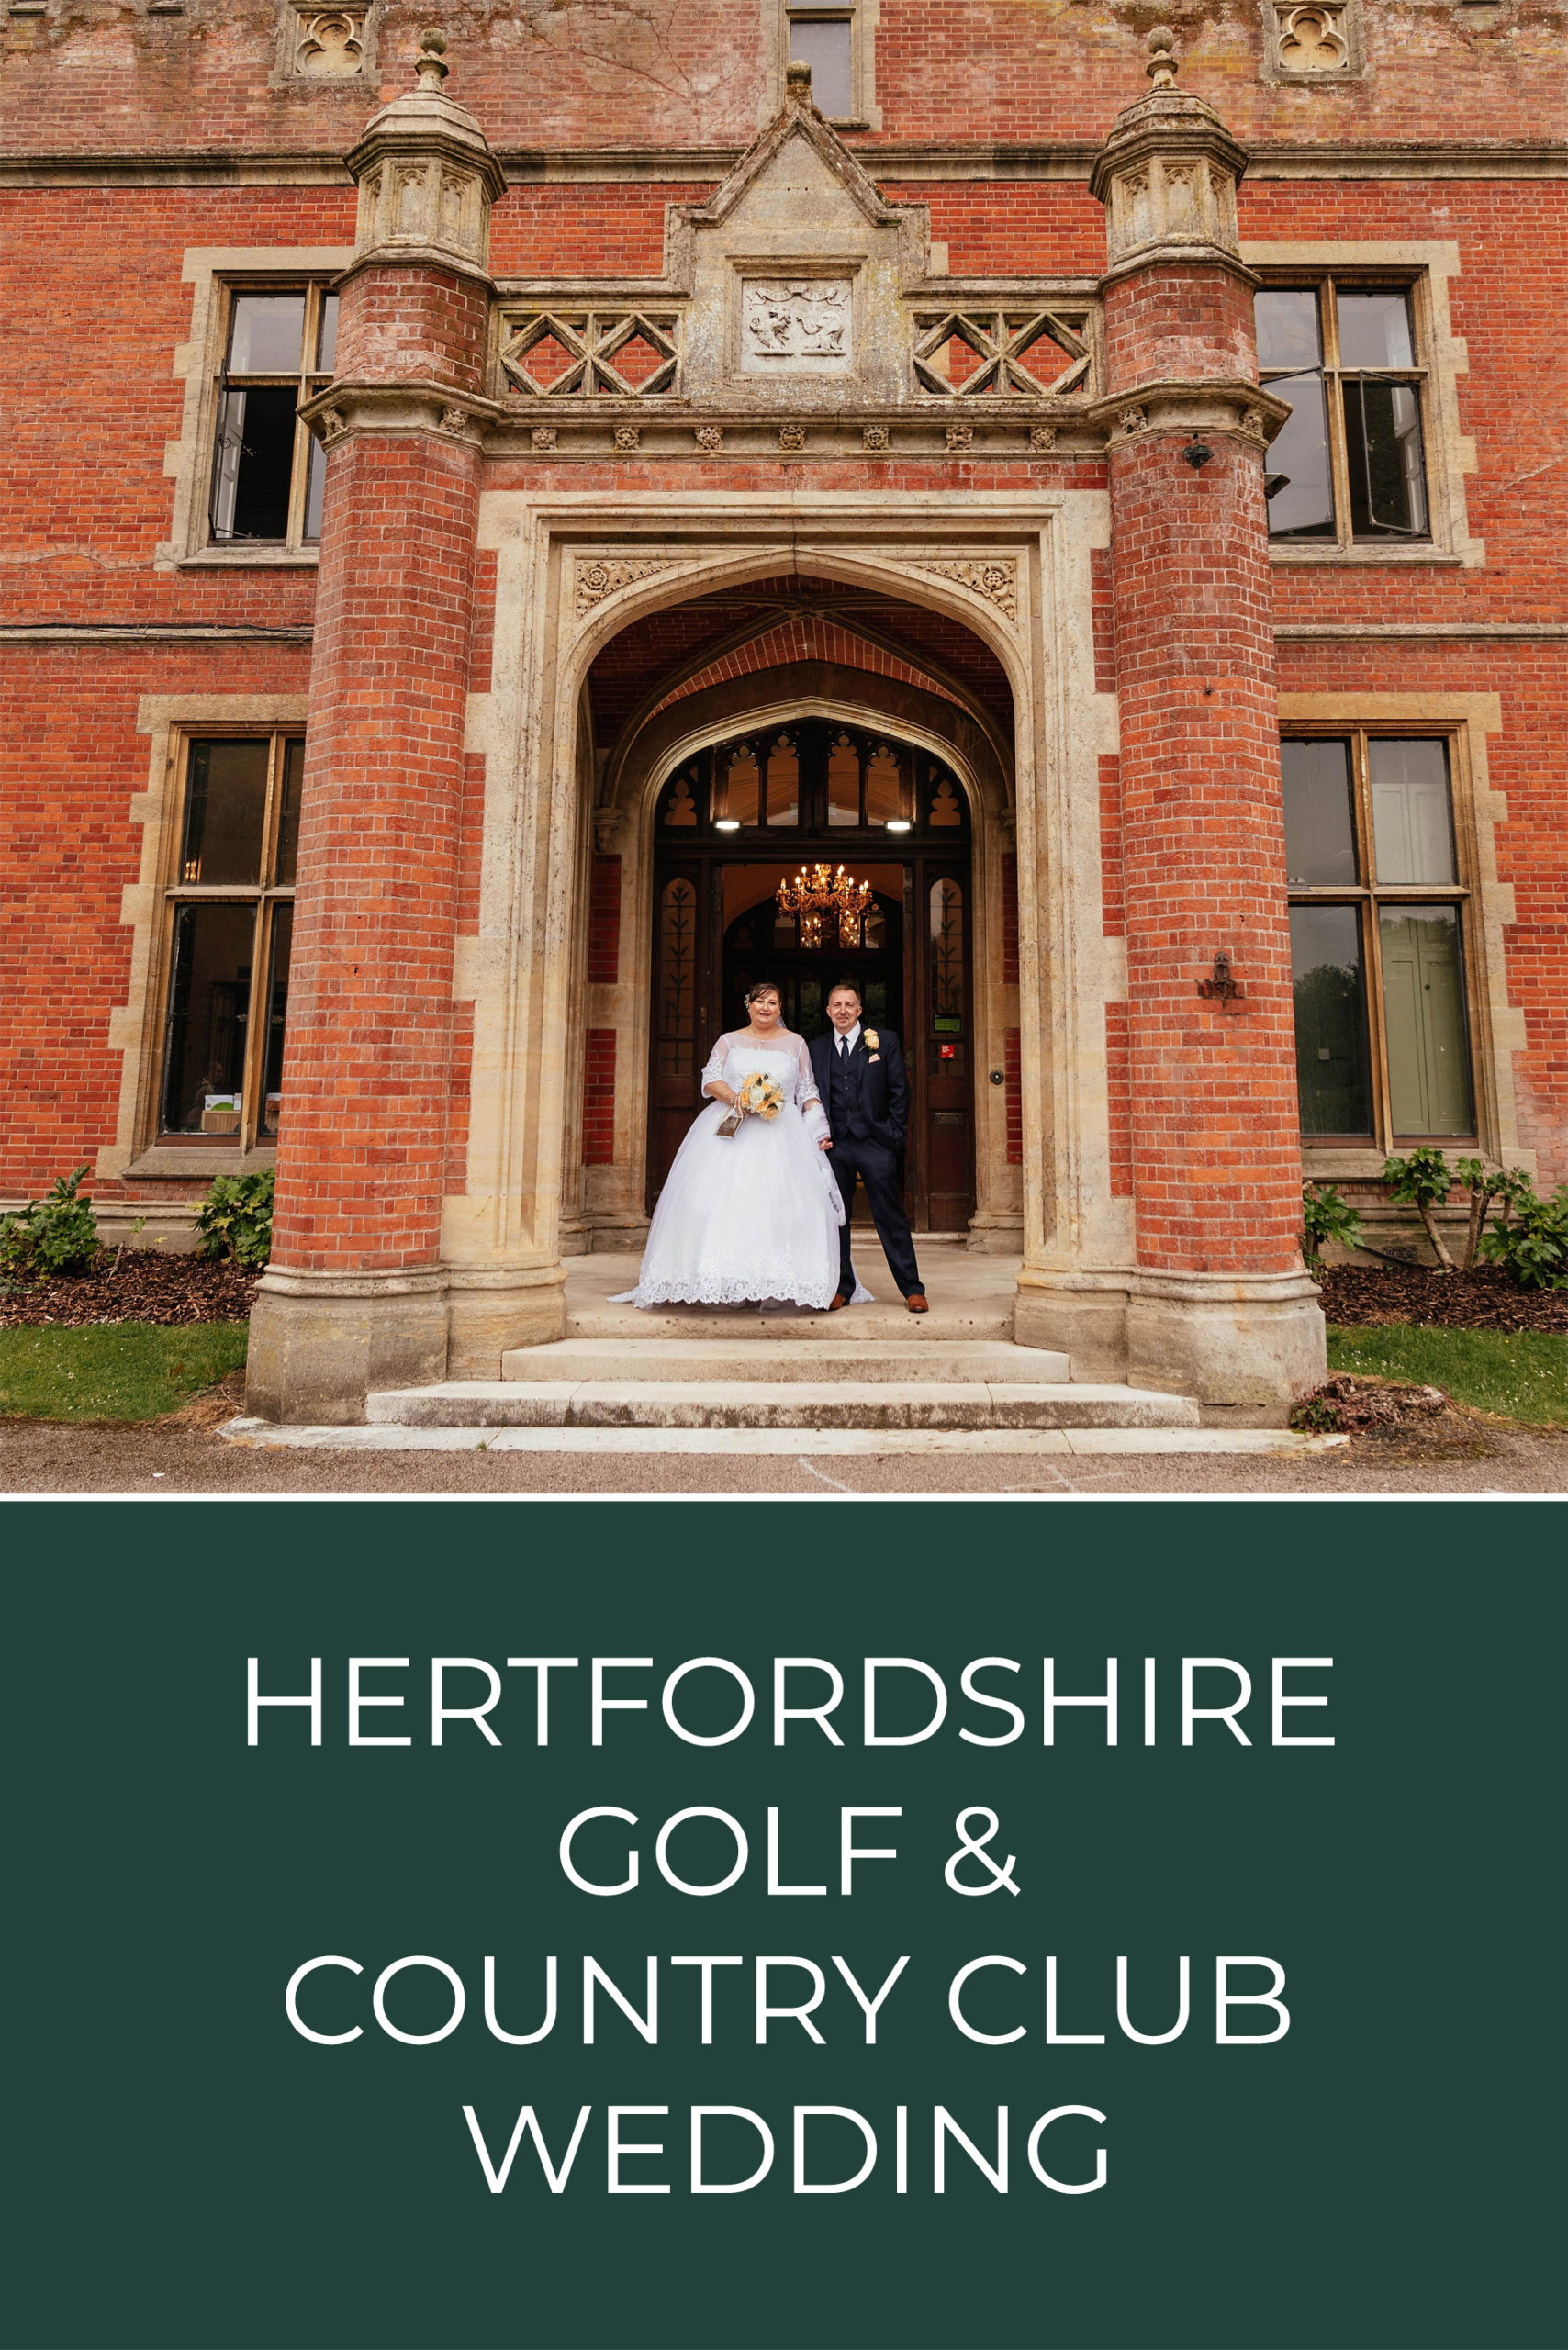 Hertfordshire Golf & Country Club Wedding Pinterest